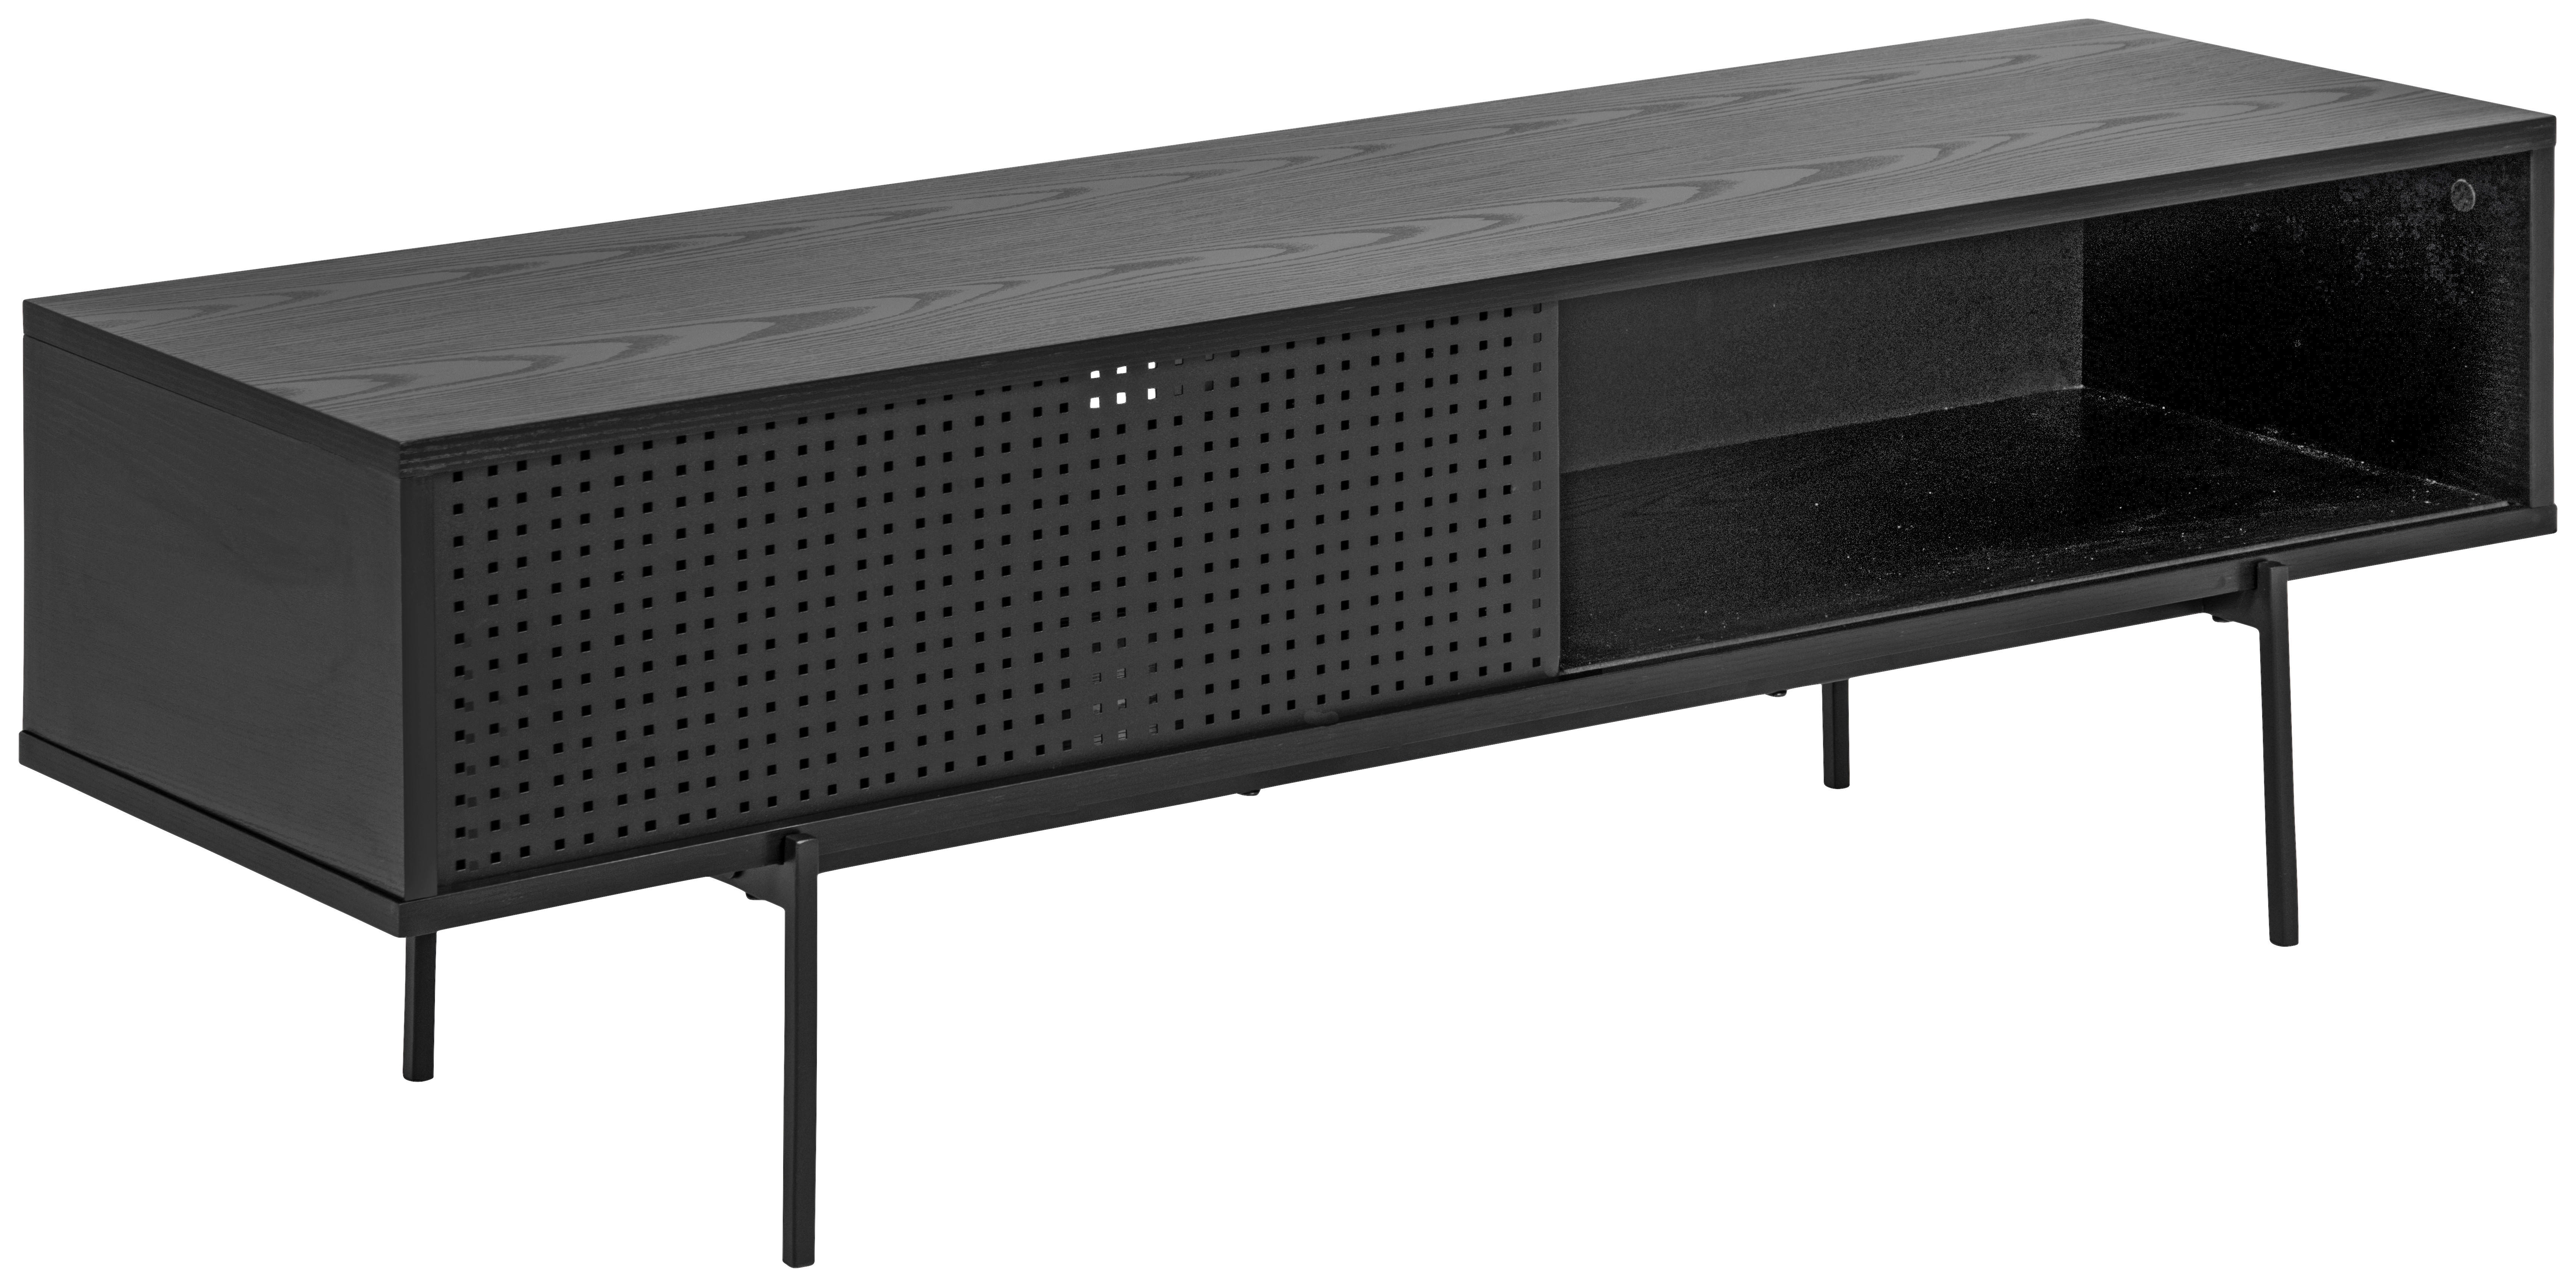 TV-BÄNK 140/44,5/40 cm  - svart, Modern, metall/träbaserade material (140/44,5/40cm) - Best Price